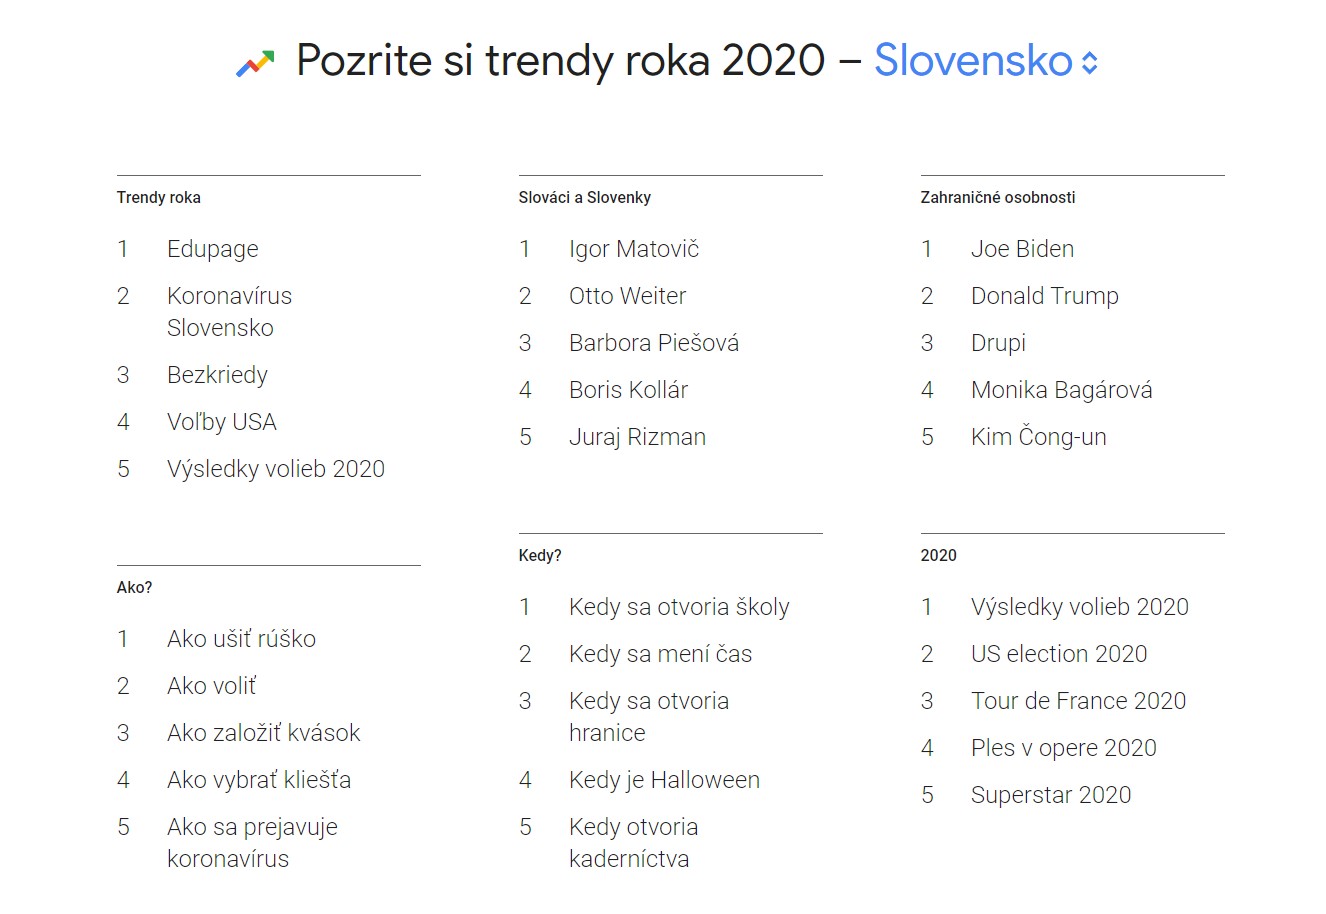 Trendy roka 2020